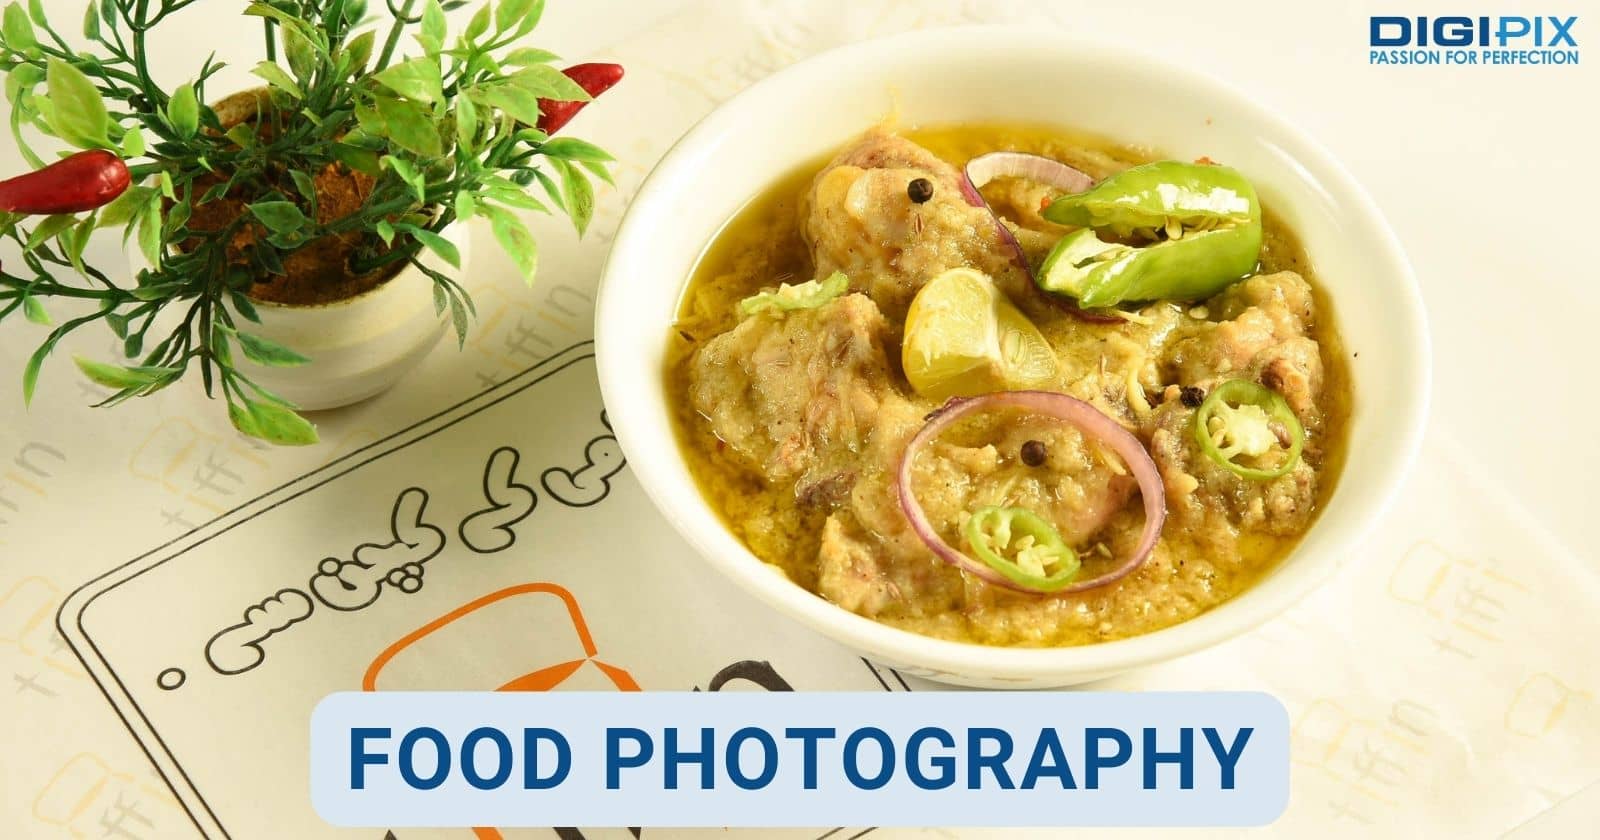 Food Photography digipix digipixinc.com